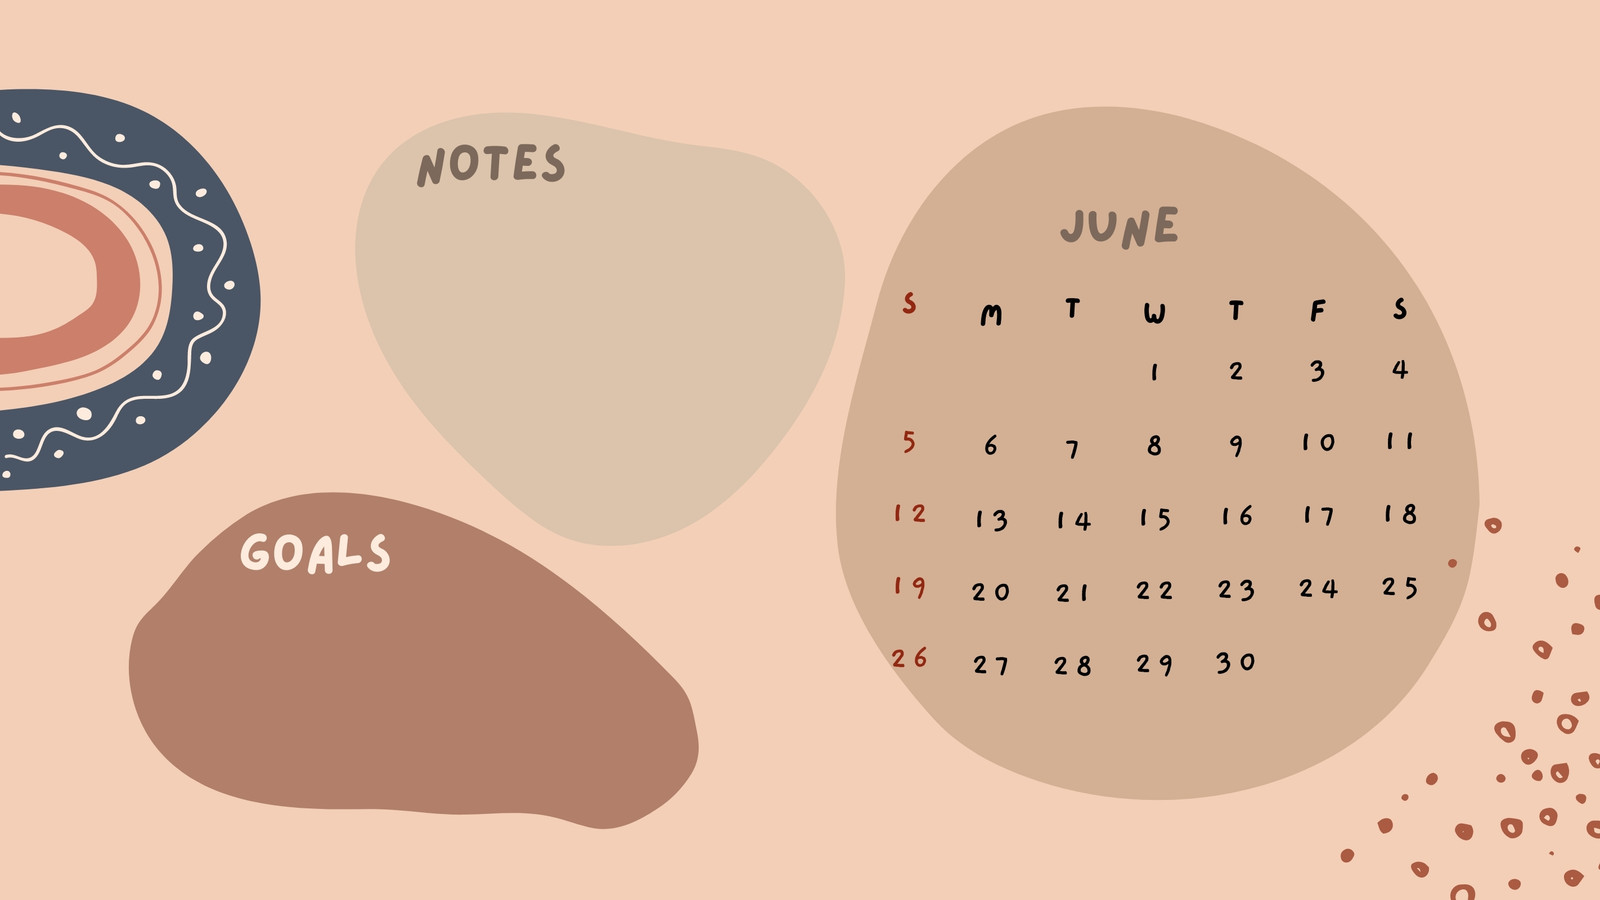 June 2022 Calendar Wallpapers  Wallpaper Cave